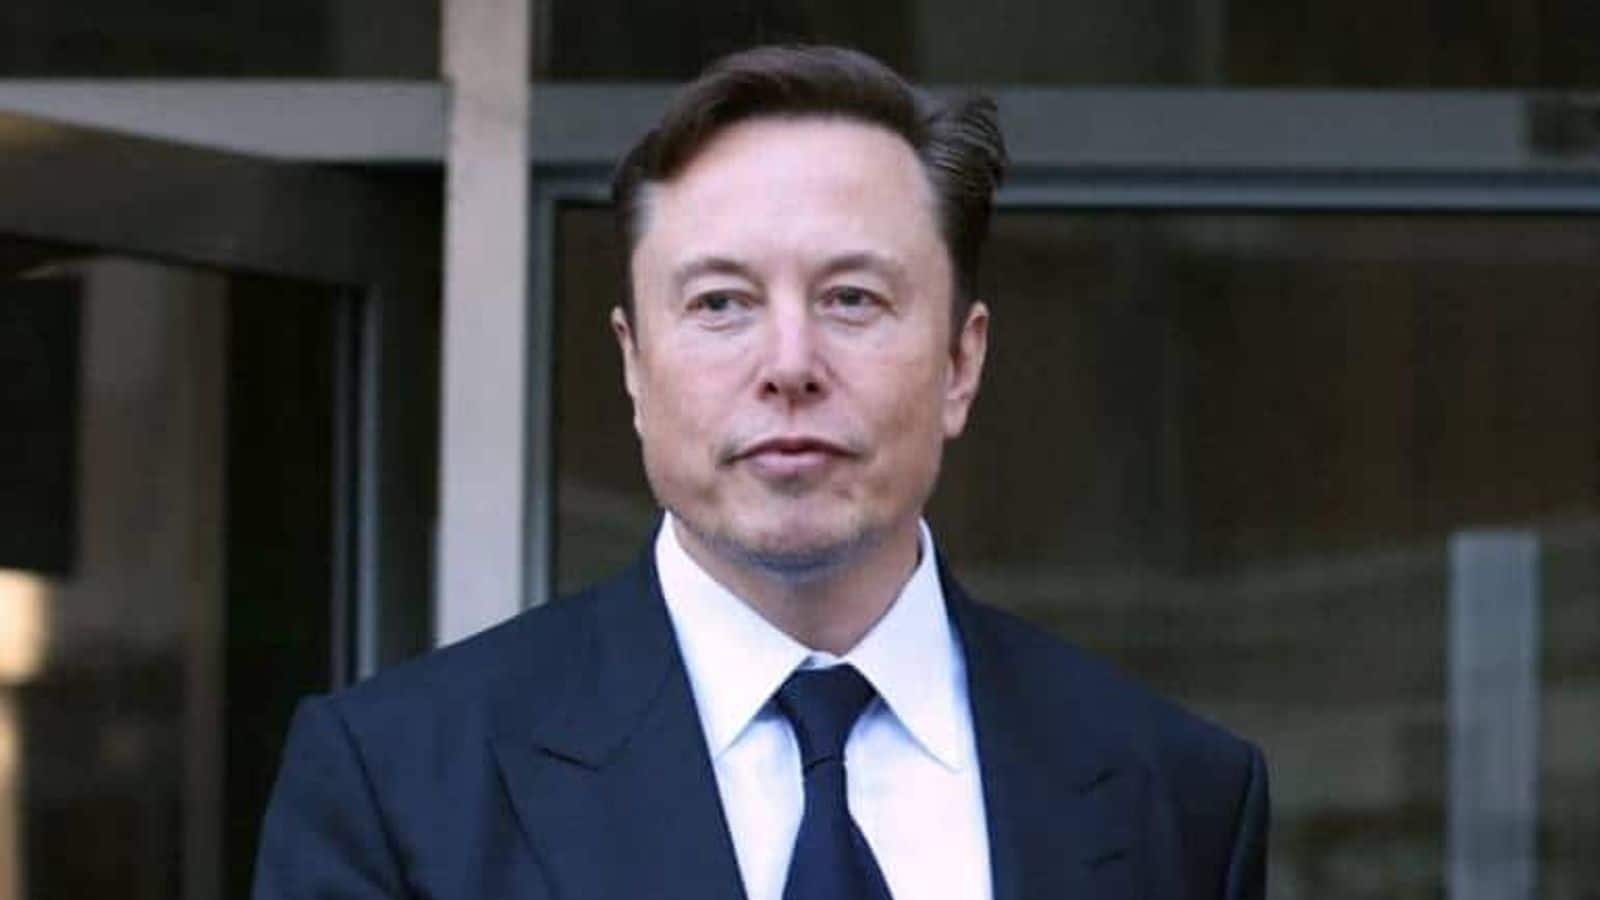 Elon Musk described as 'arrogant billionaire' by Australian PM